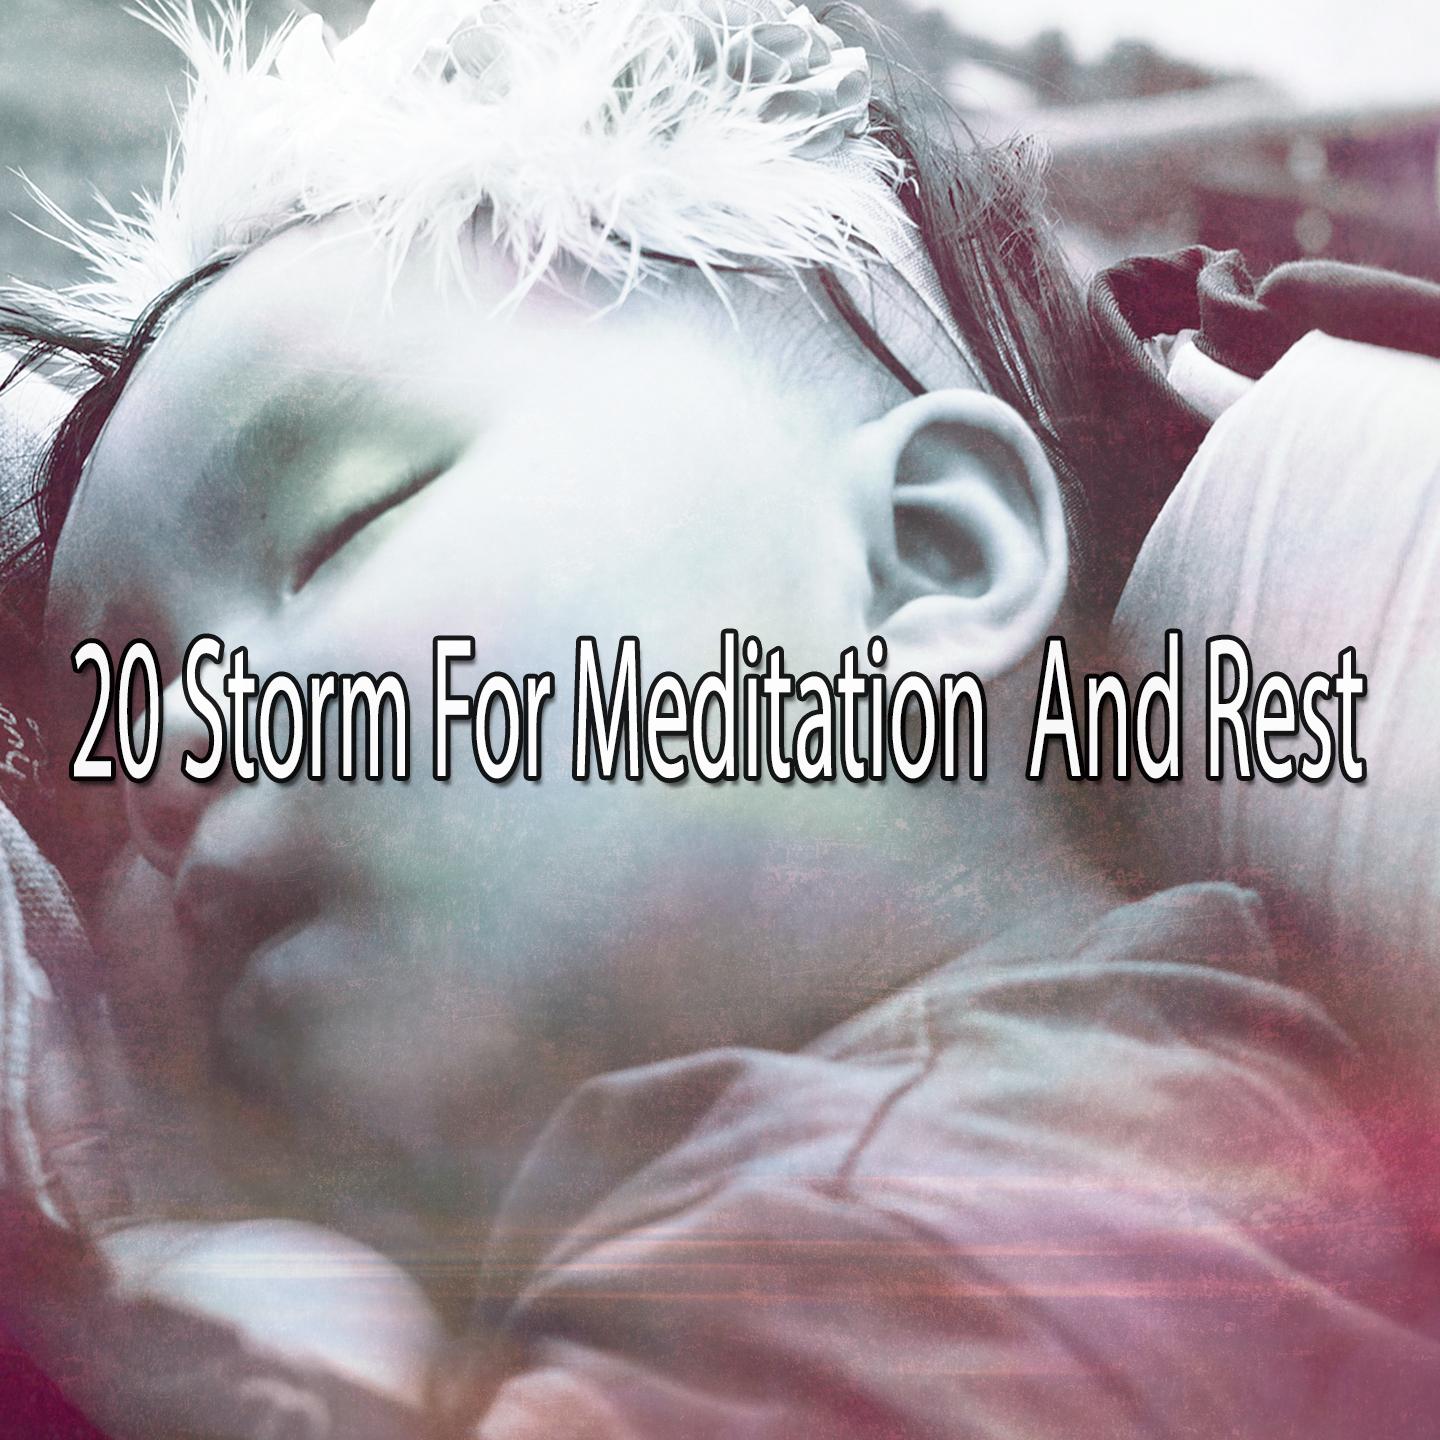 20 Storm for Meditation and Rest